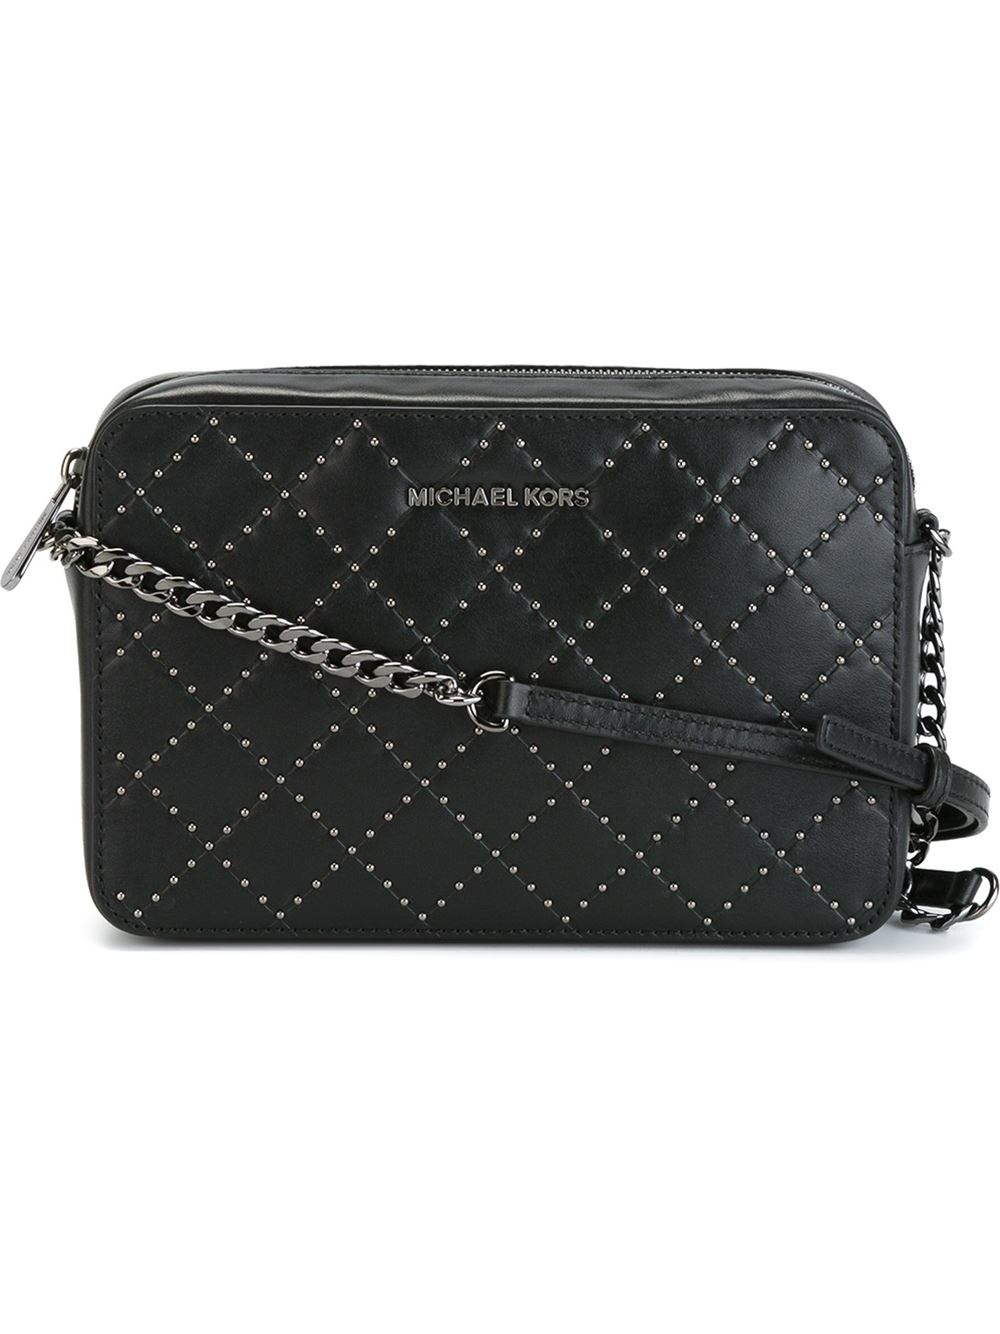 Total 64+ imagen michael kors black studded crossbody purse